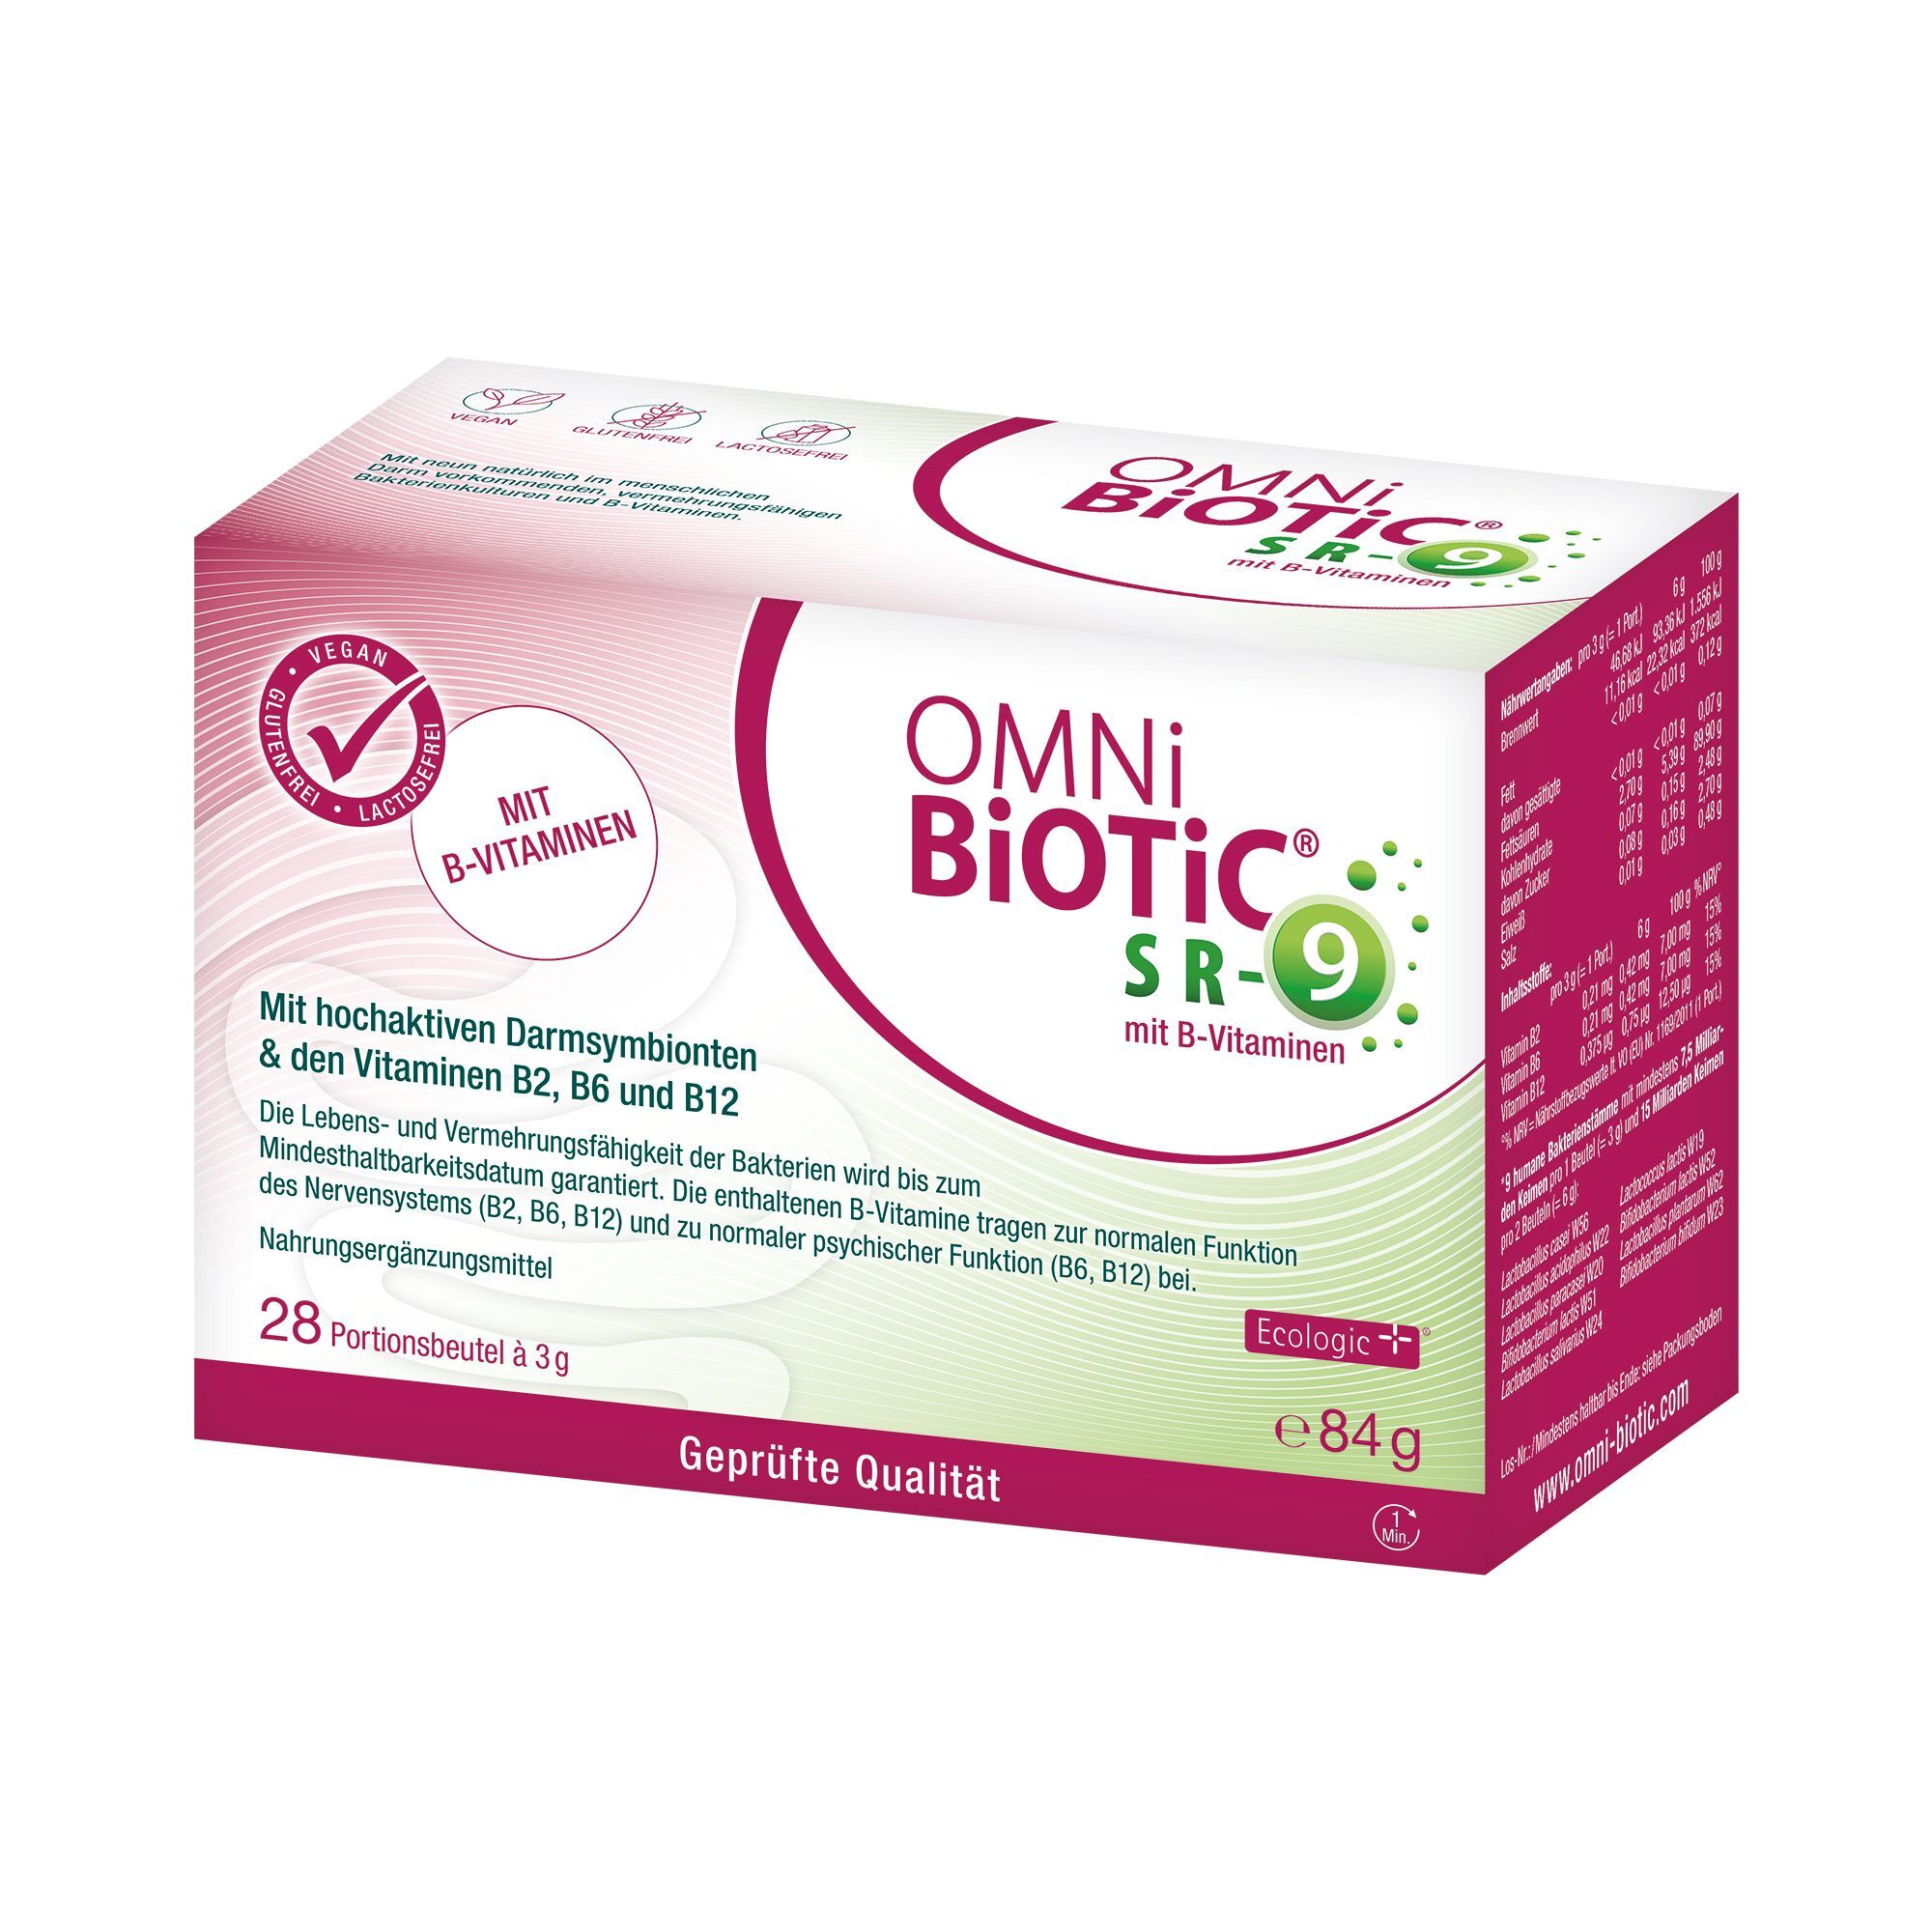 OMNi-BiOTiC Omni Biotic Sr-9 mit B-Vitaminen